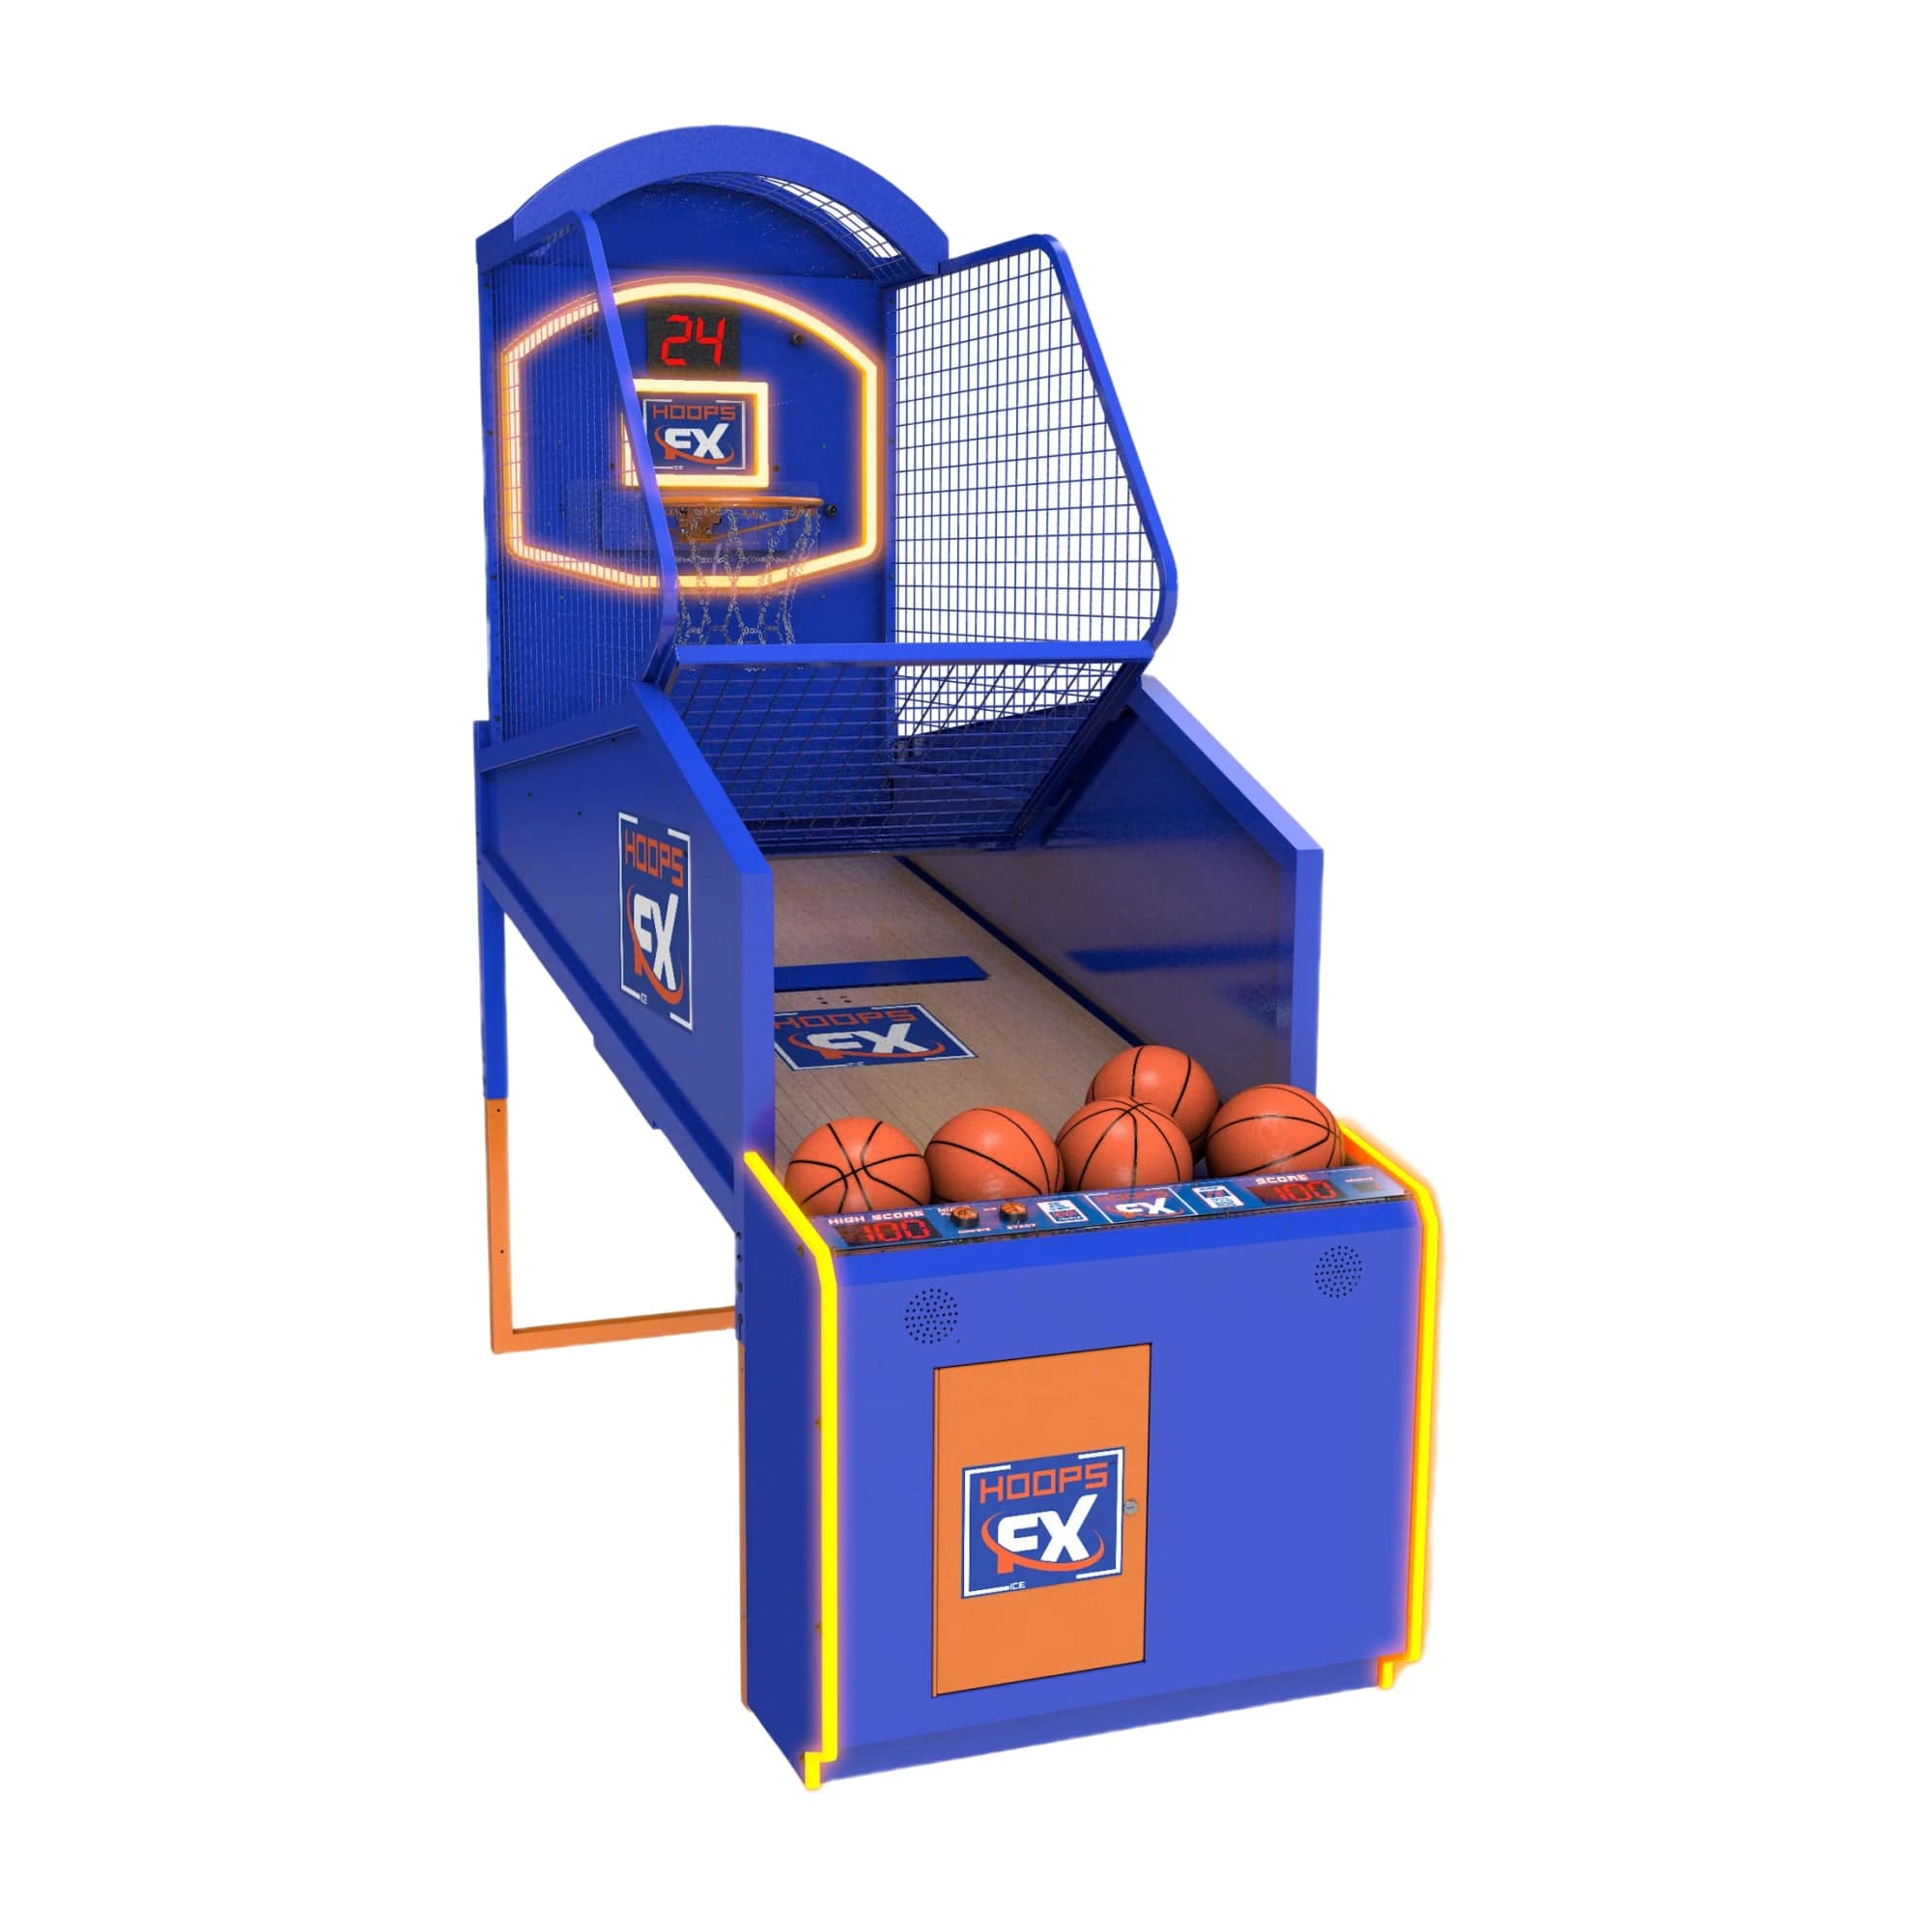 Hoops FX Arcade Basketball